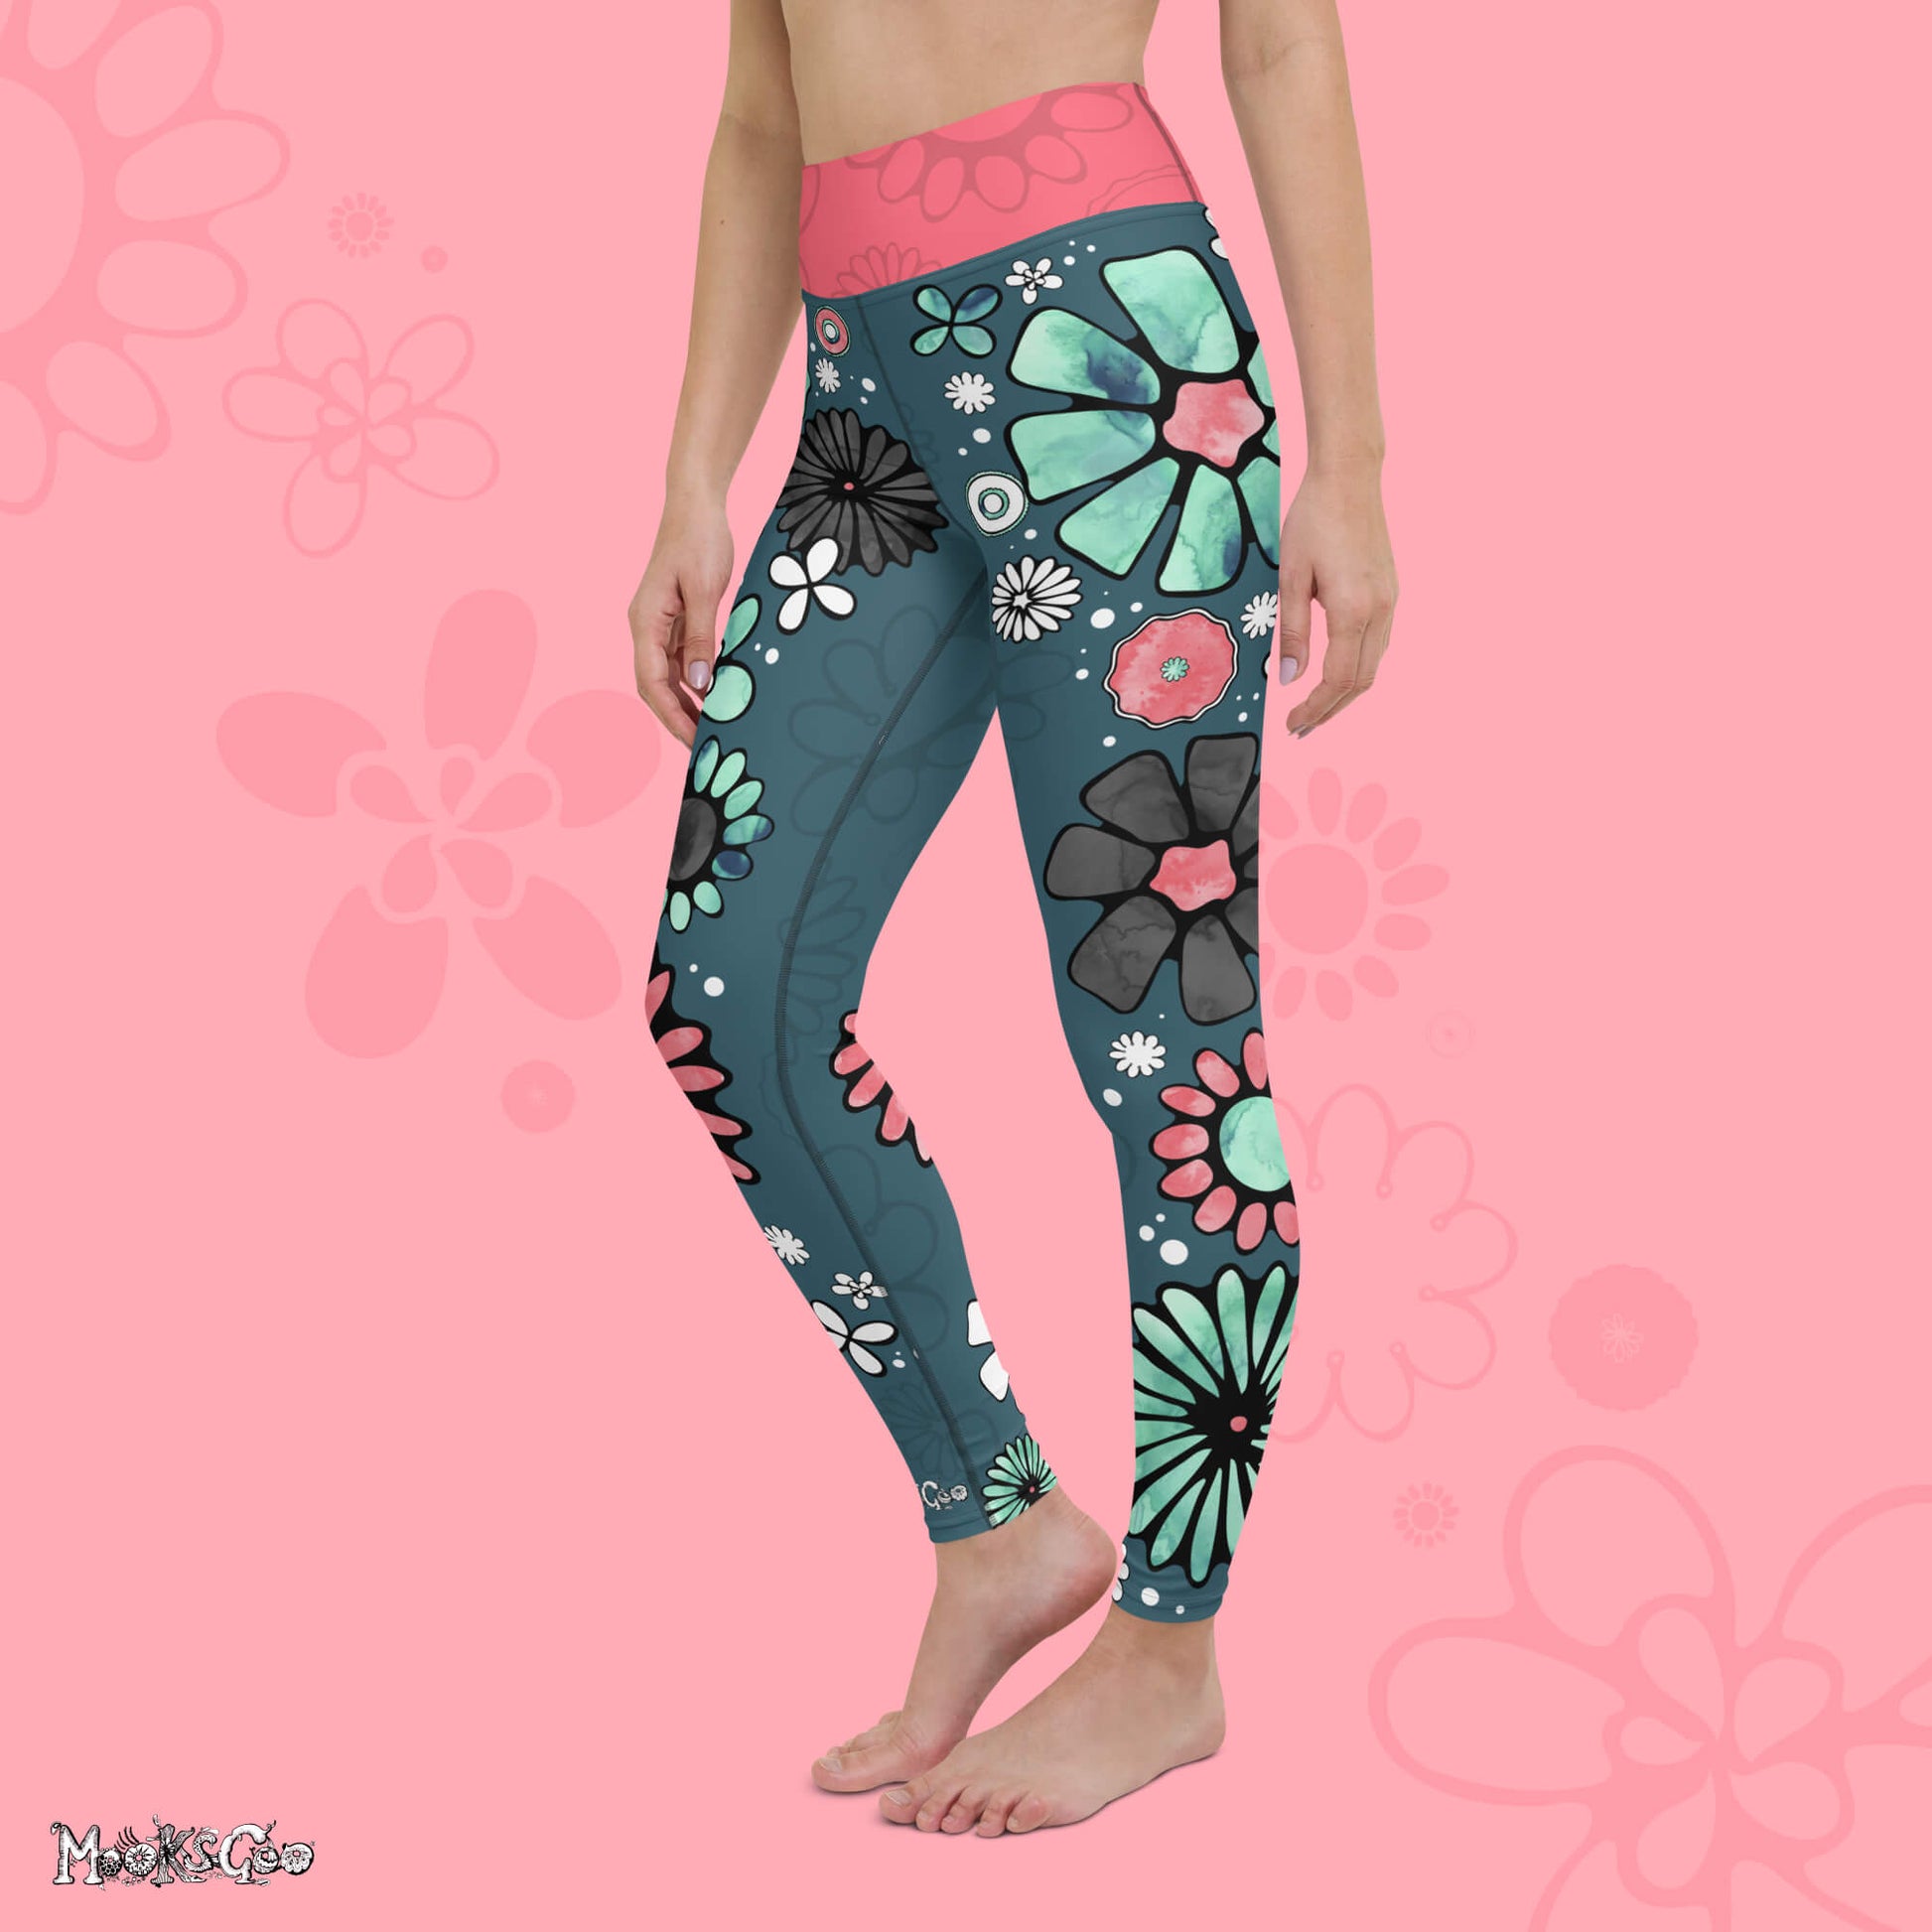 Mossimo Supply Co. Women’s Floral Print Workout Yoga Legging Pants SZ L